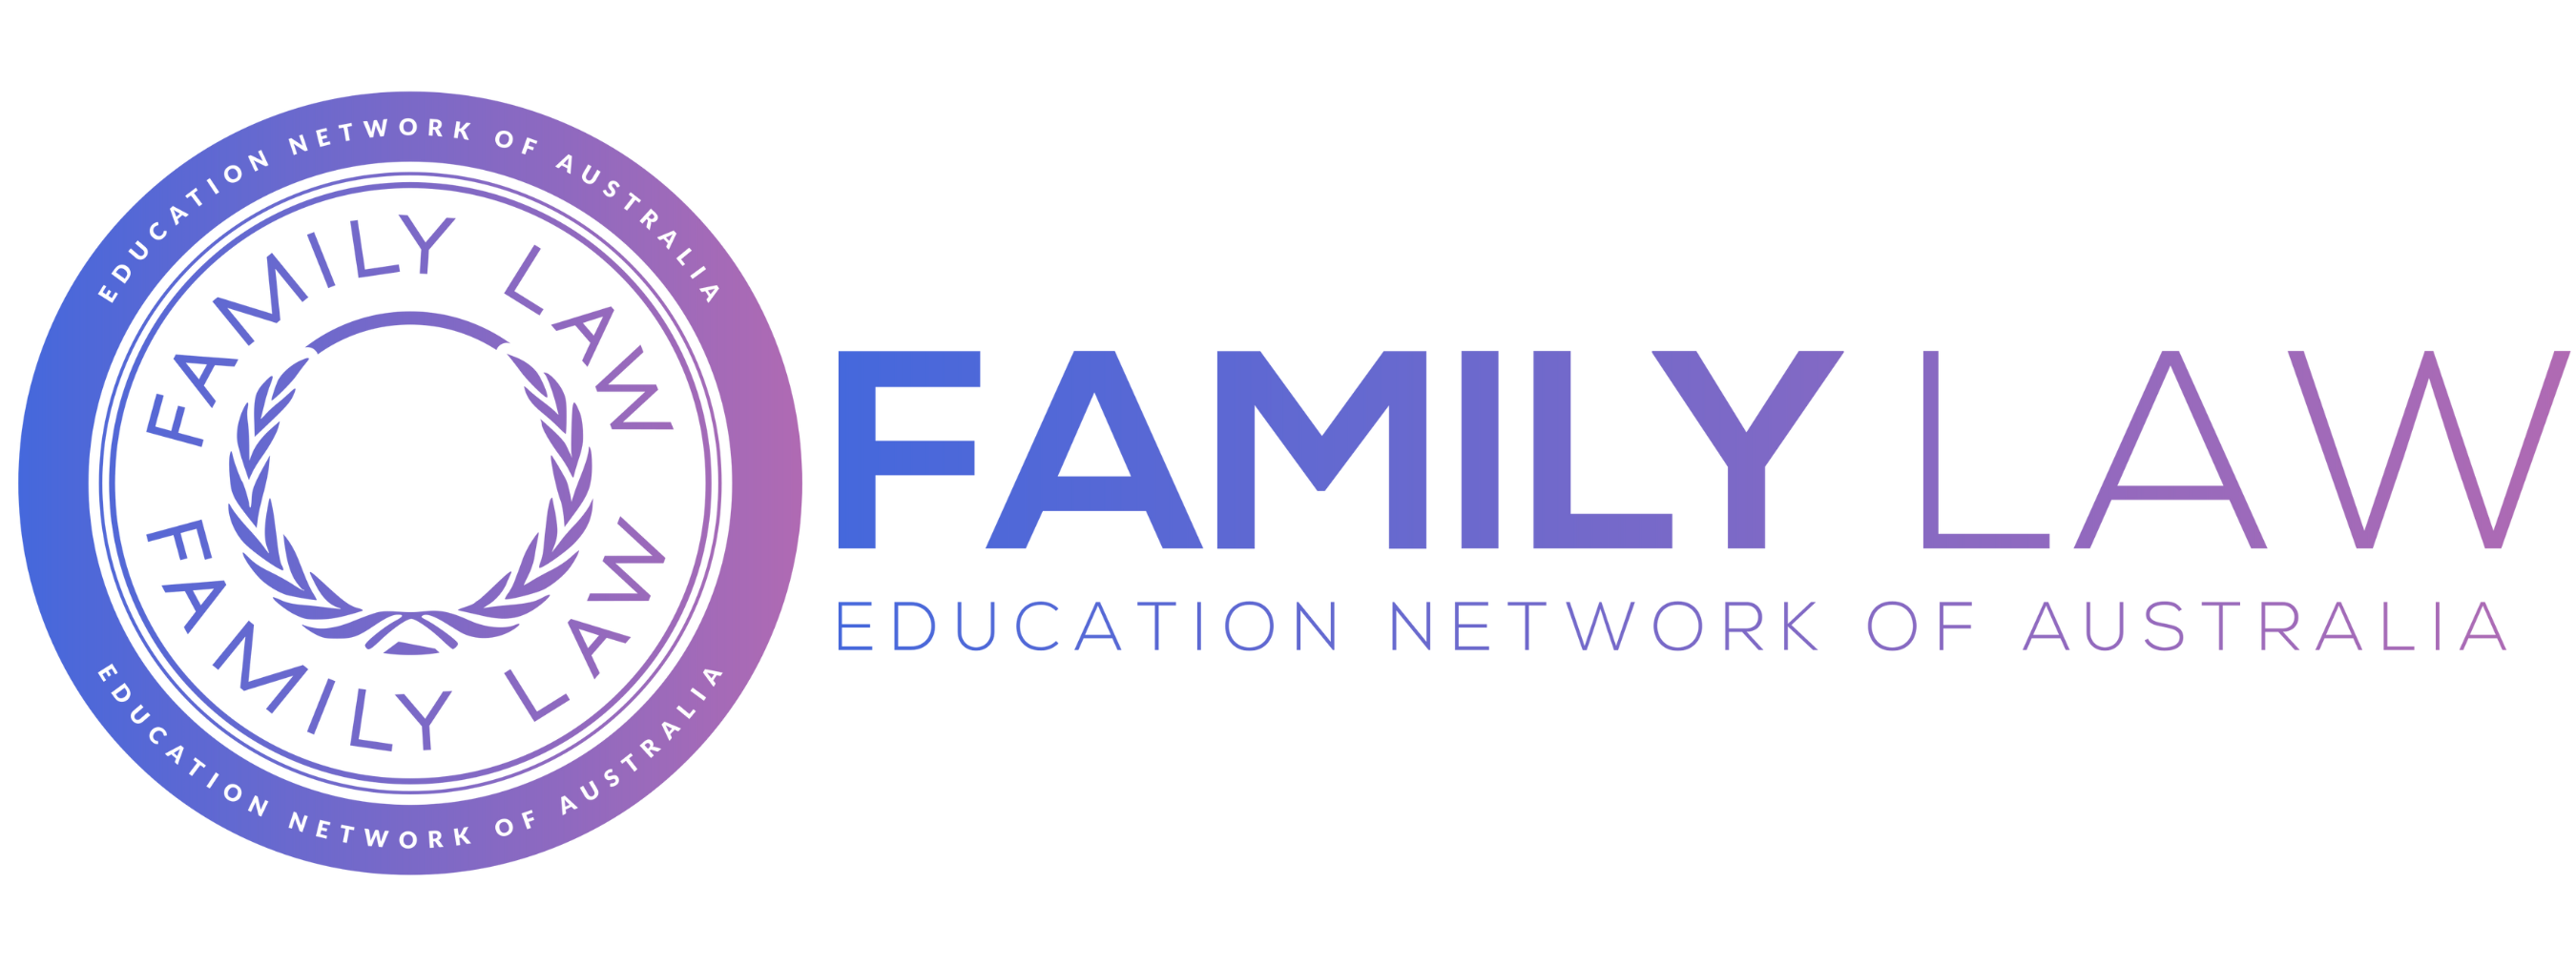 Family Law Education Network of Australia